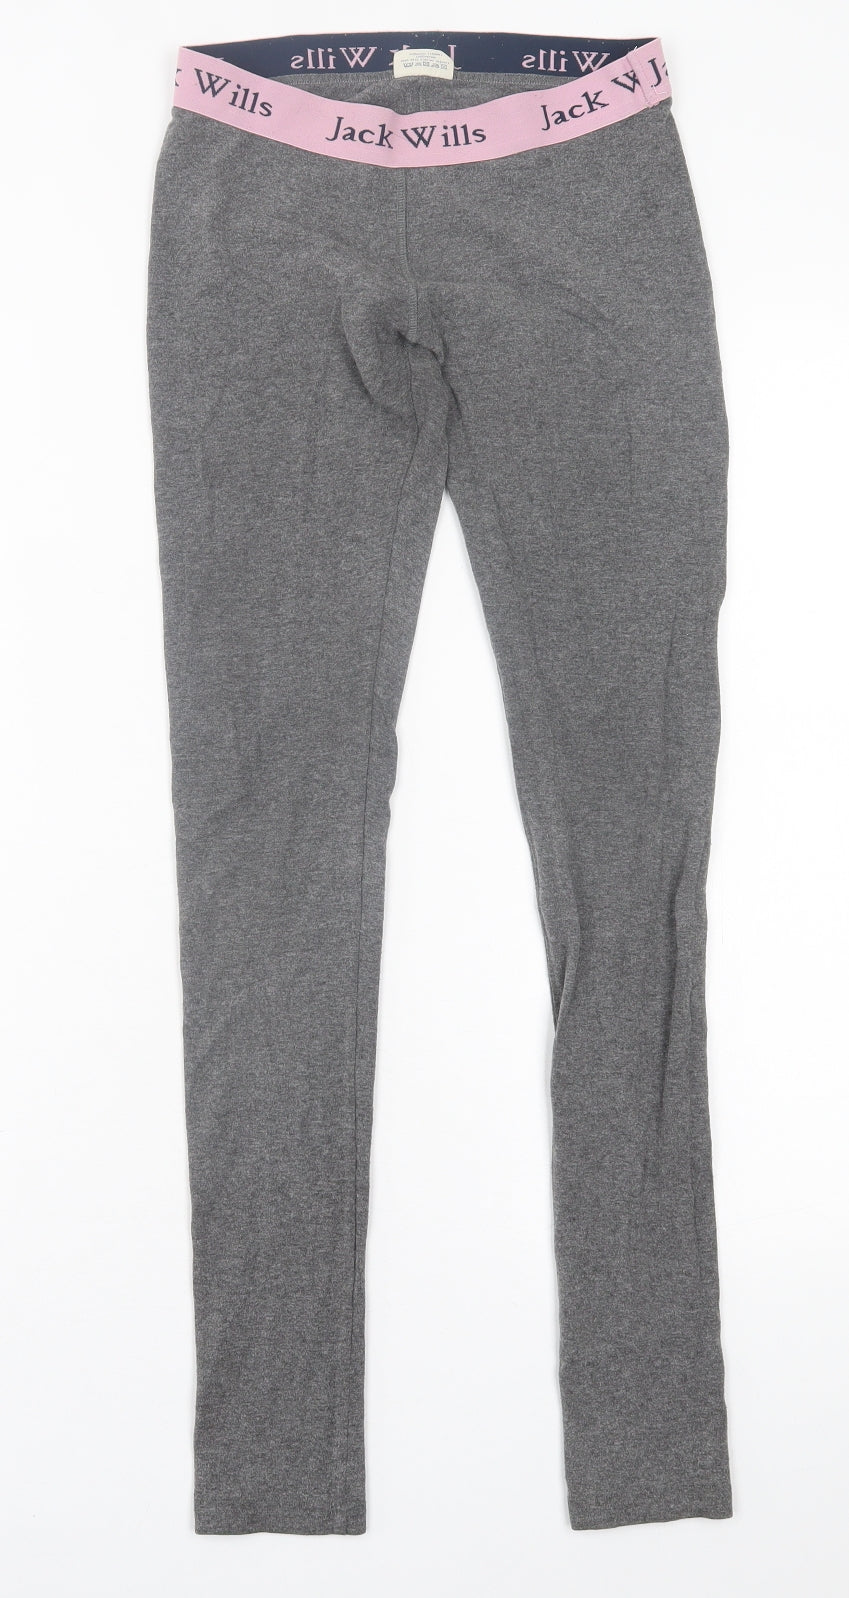 Primark Womens Grey Cotton Jegging Leggings Size 6 L25 in - BT21 – Preworn  Ltd